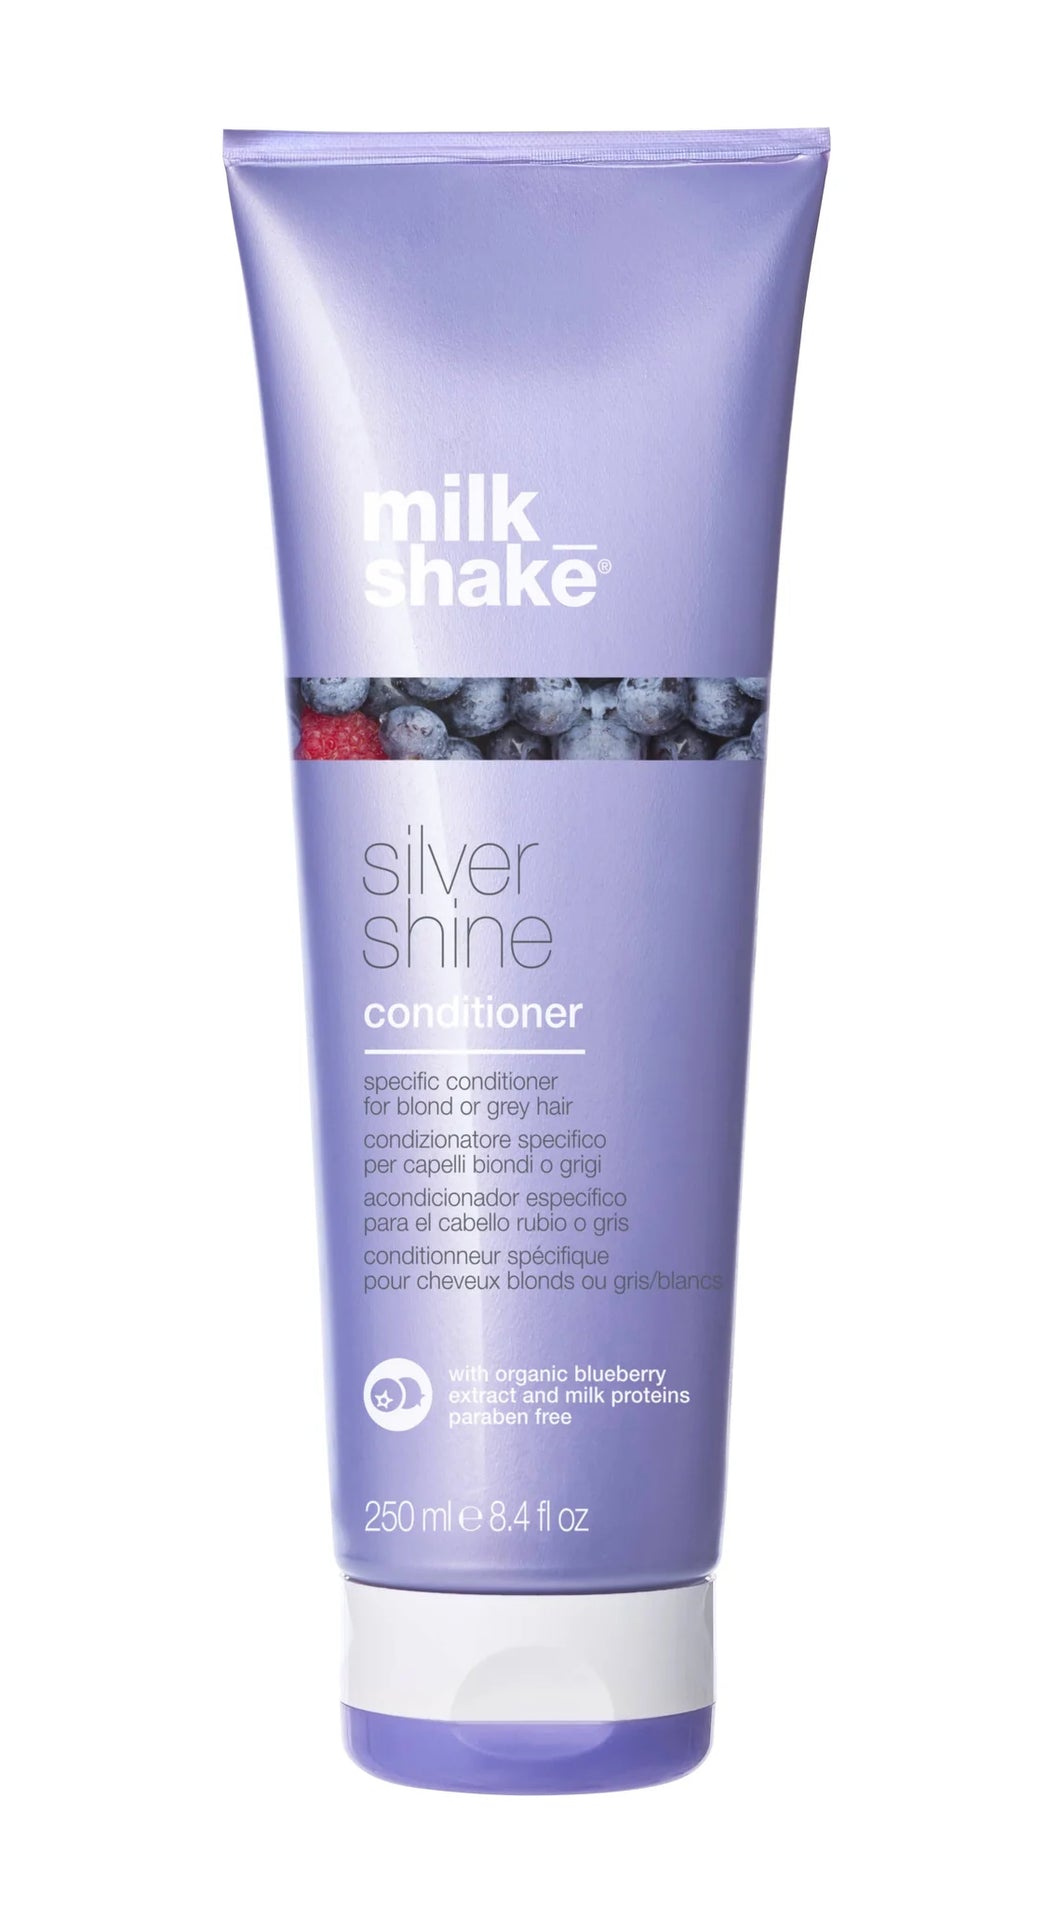 Milkshake silver shine conditioner